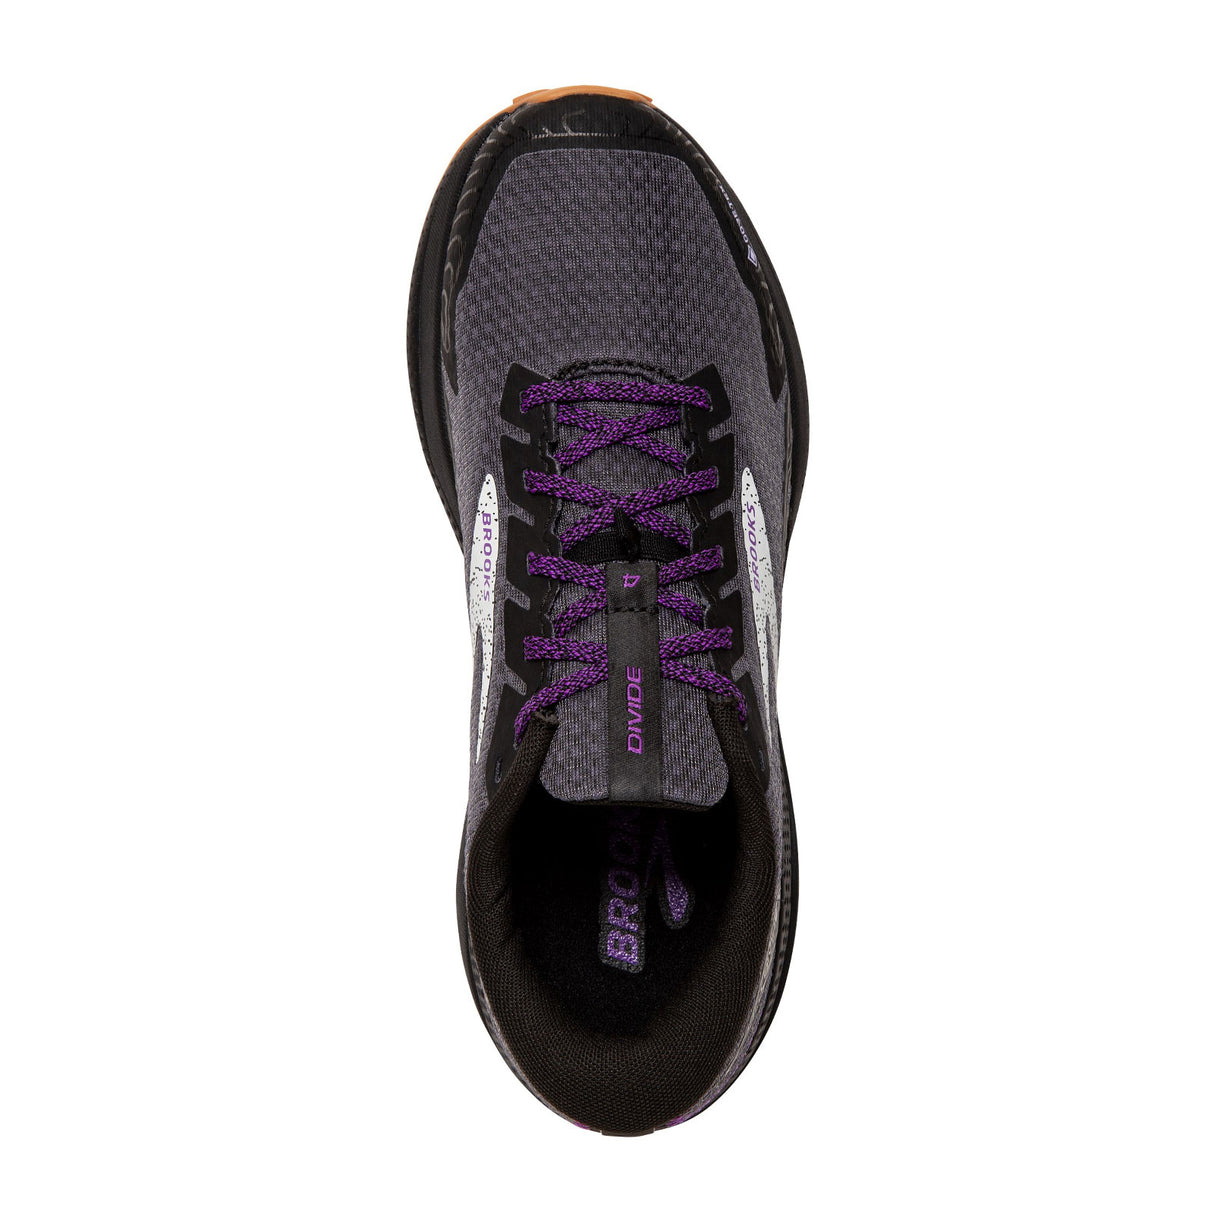 Brooks Divide 4 GTX (Women) - Black/Blackened Pearl/Purple Athletic - Running - Neutral - The Heel Shoe Fitters